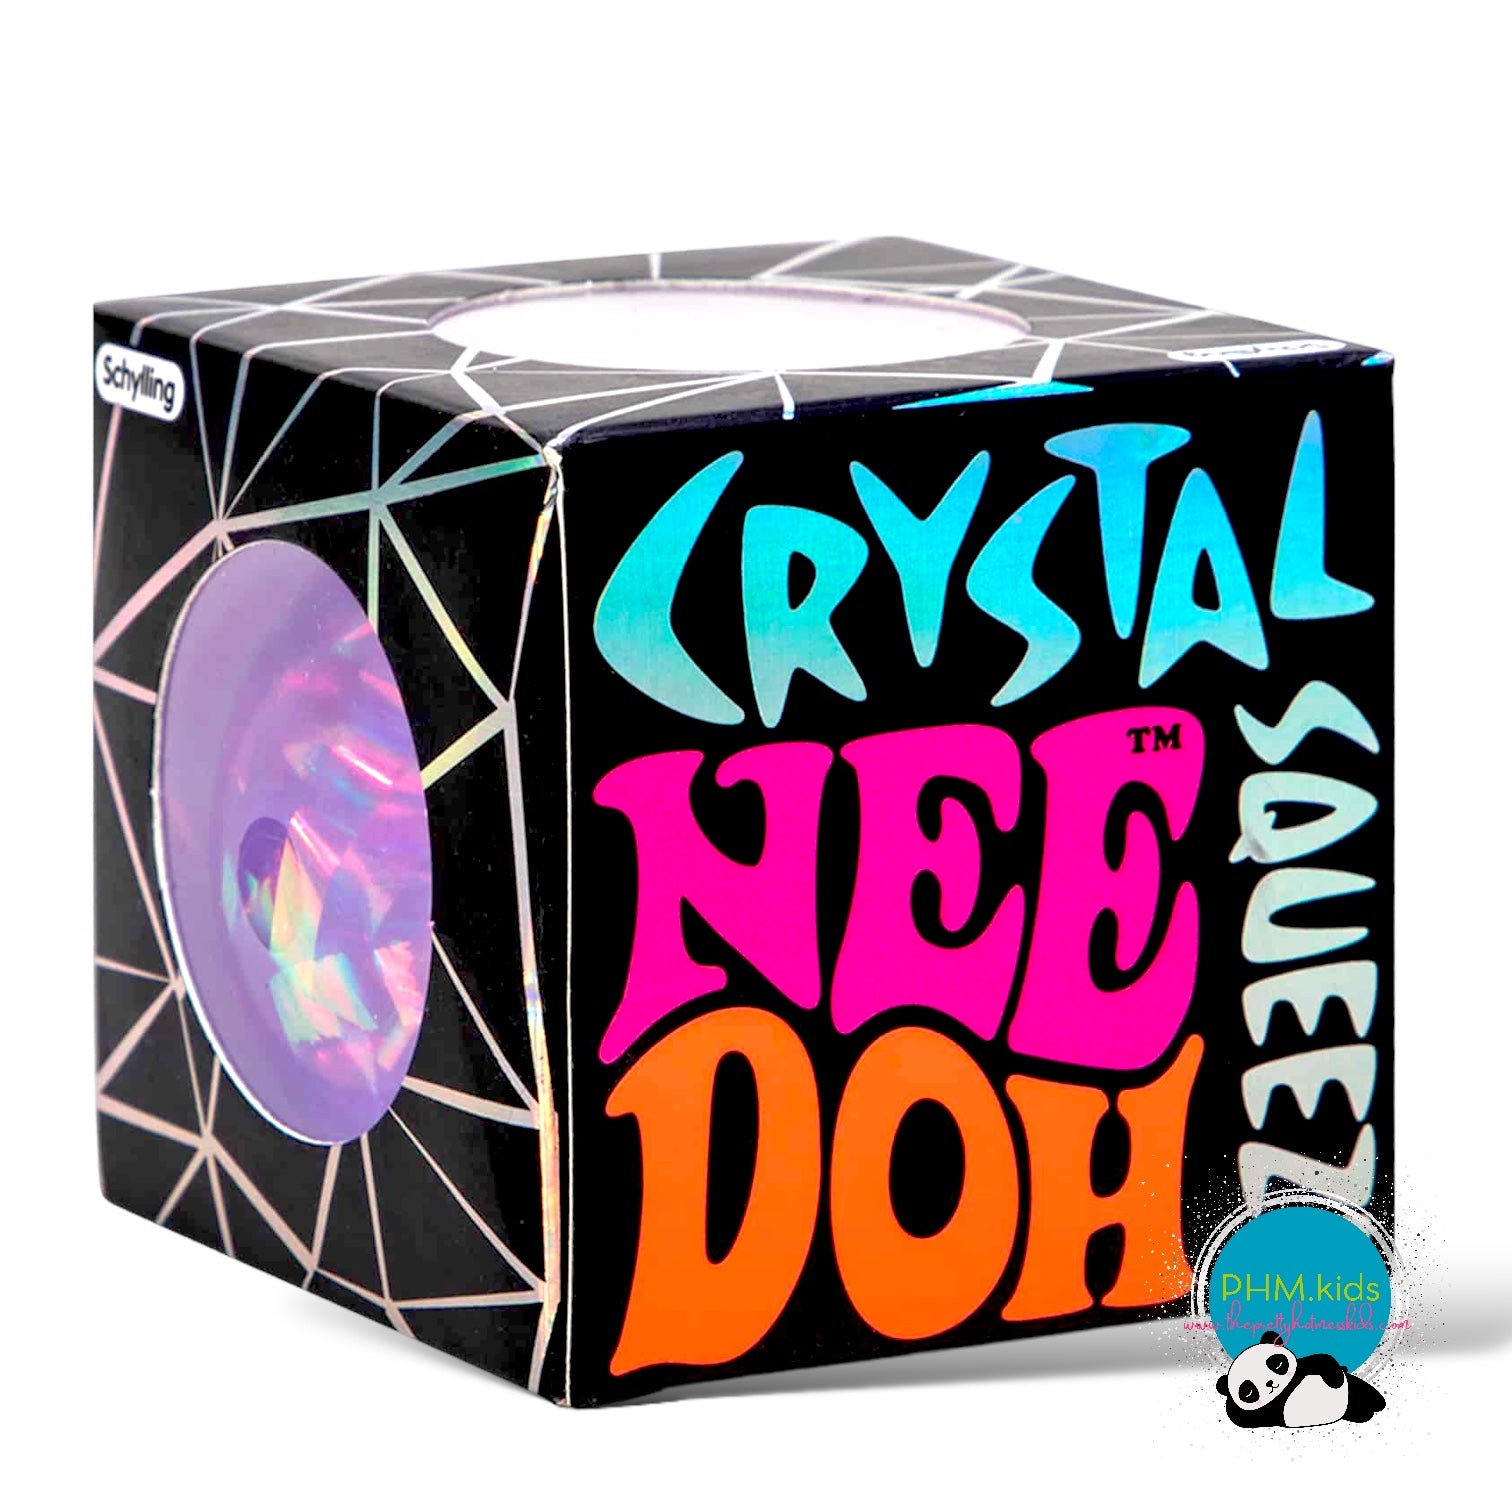 Crystal NeeDoh